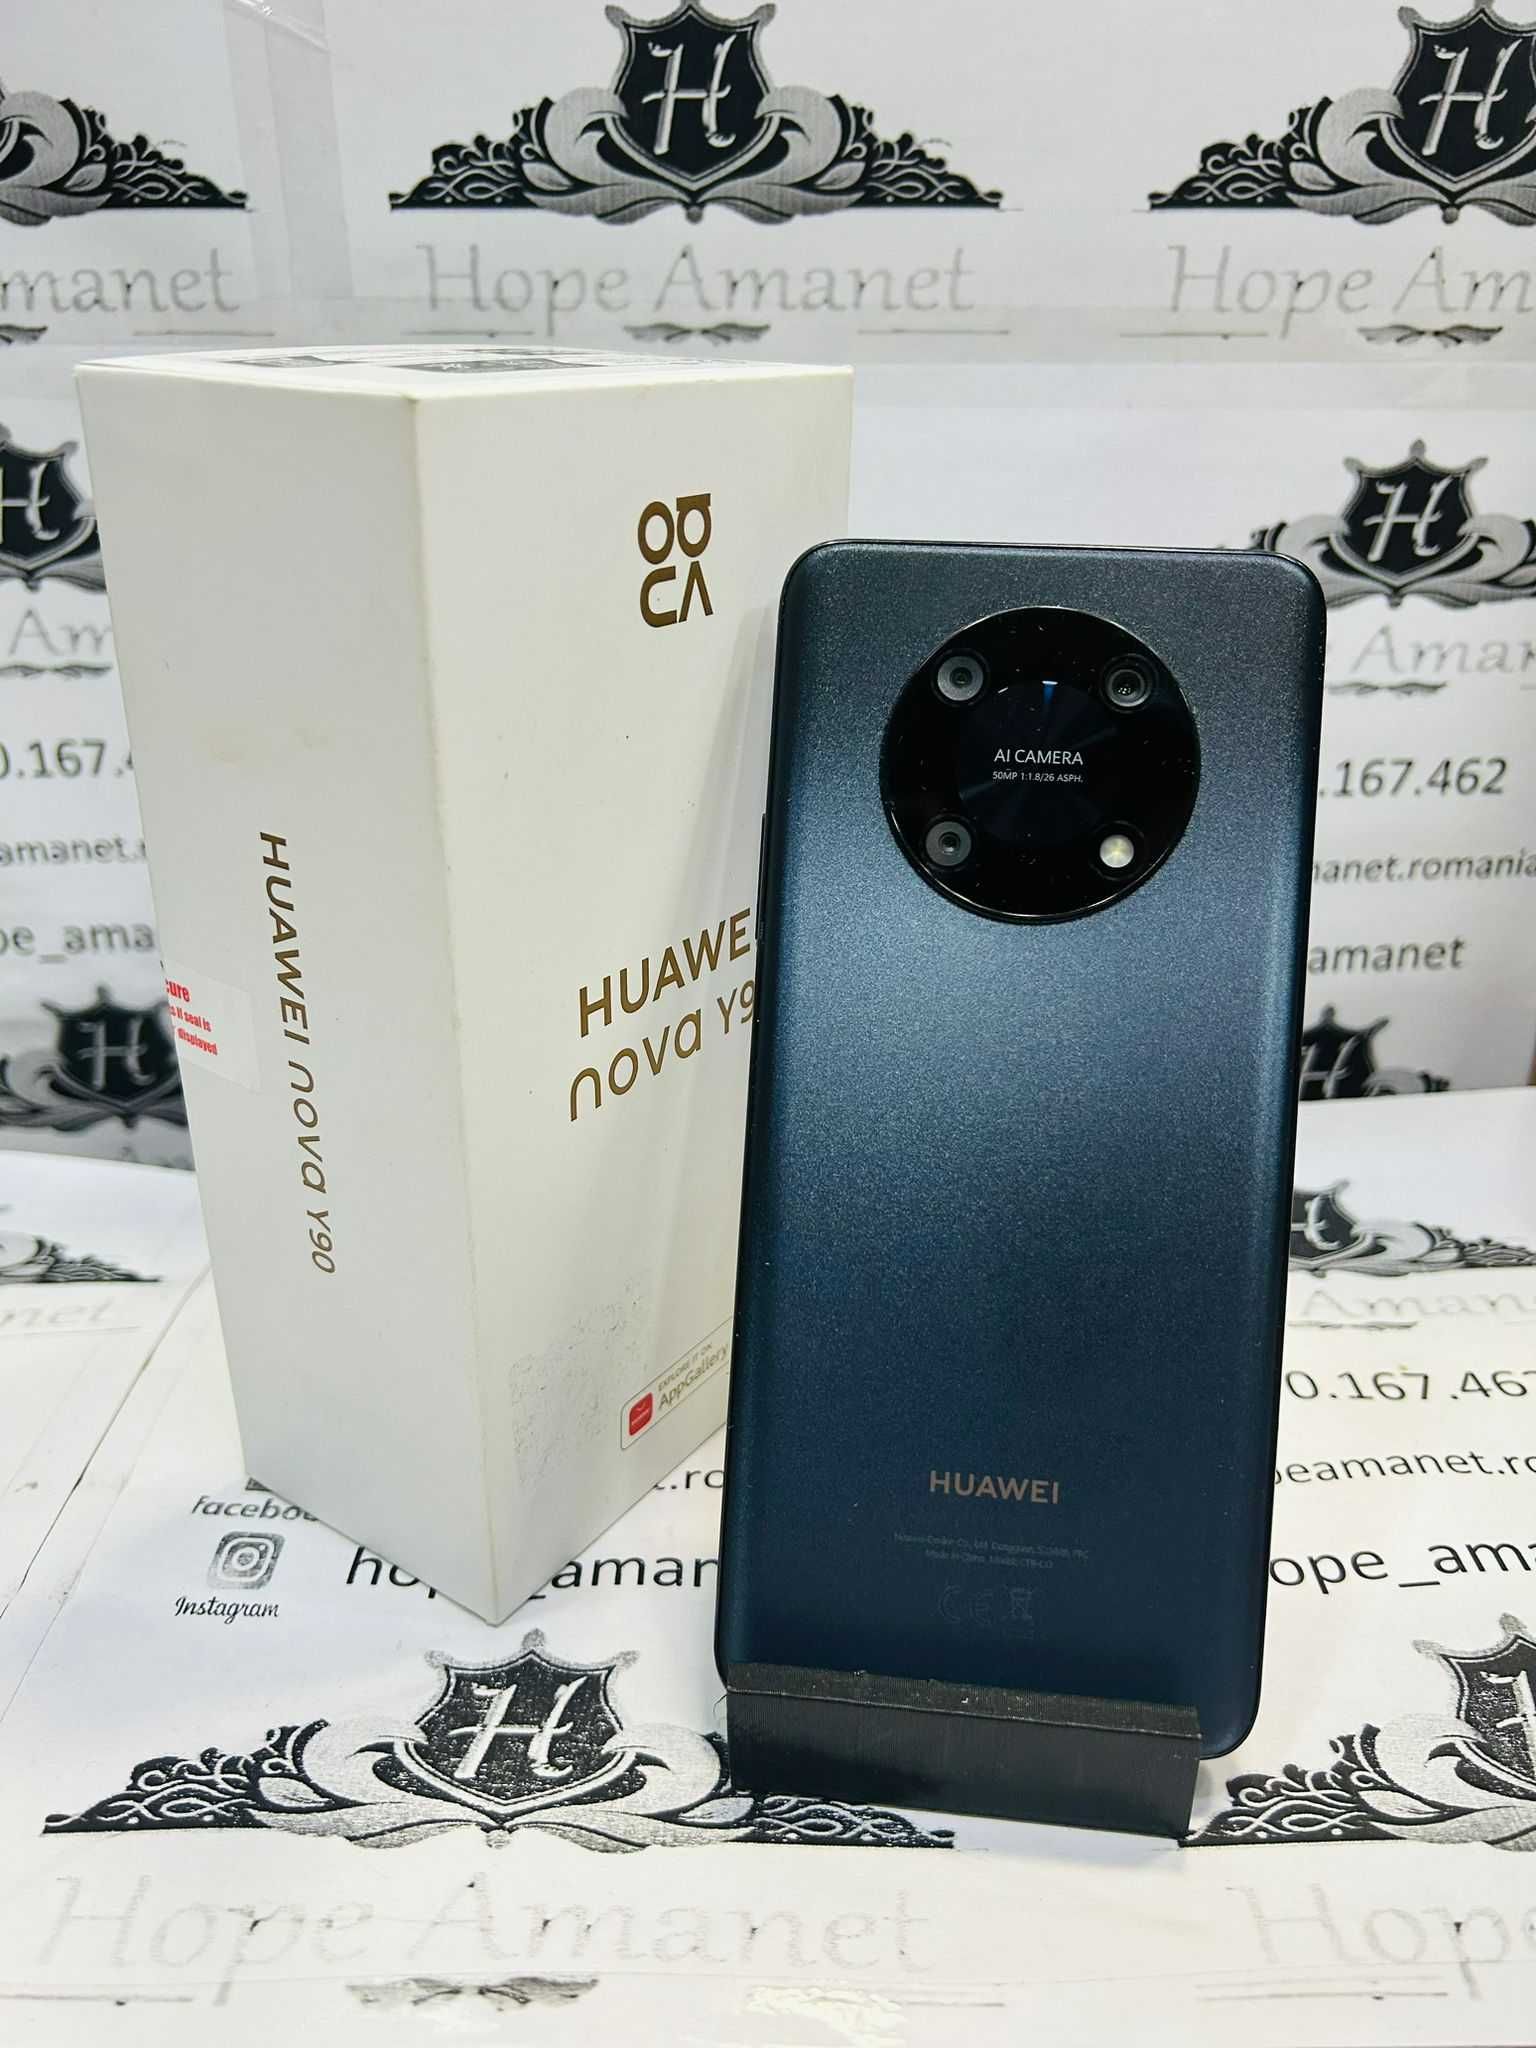 HOPE AMANET P12 - Huawei Nova Y90 / 128-6 GB / Negru